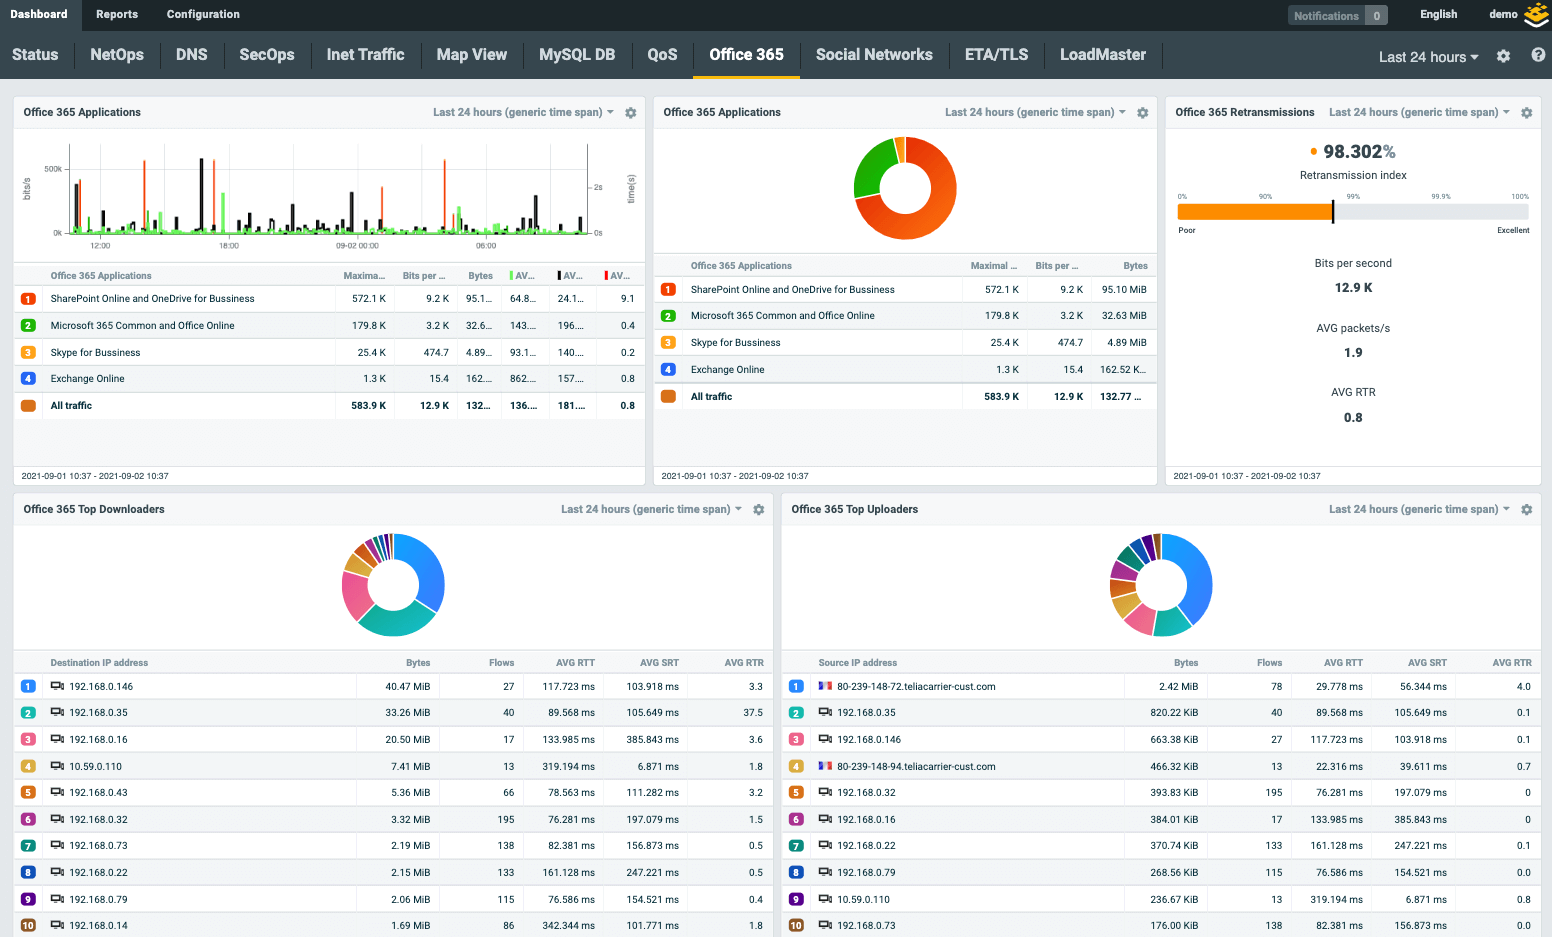 Flowmon's Performance Monitoring Dashboard